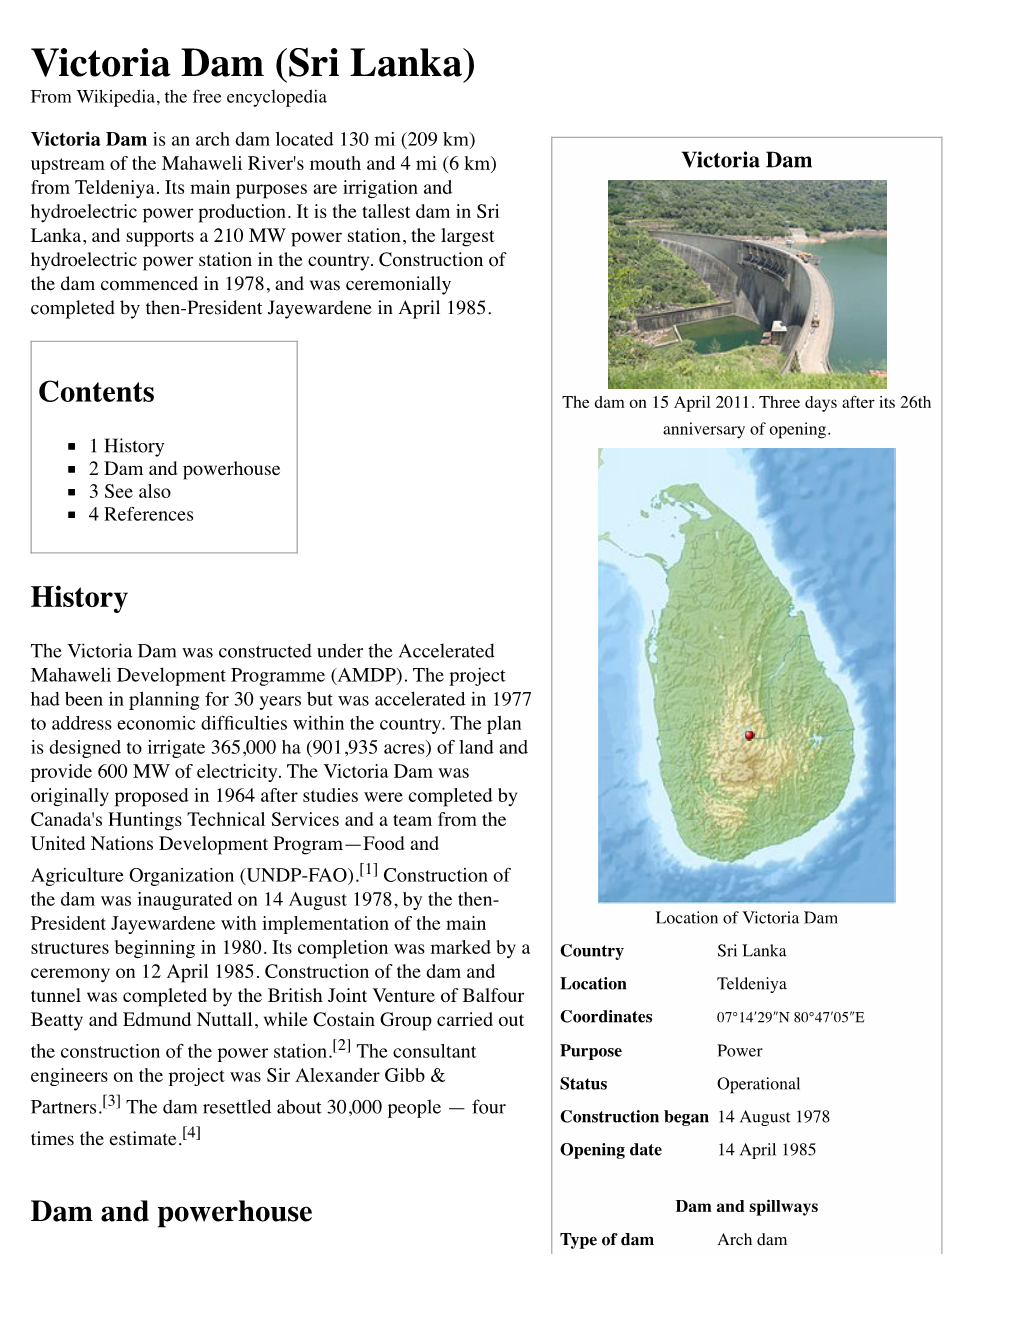 Victoria Dam (Sri Lanka) from Wikipedia, the Free Encyclopedia